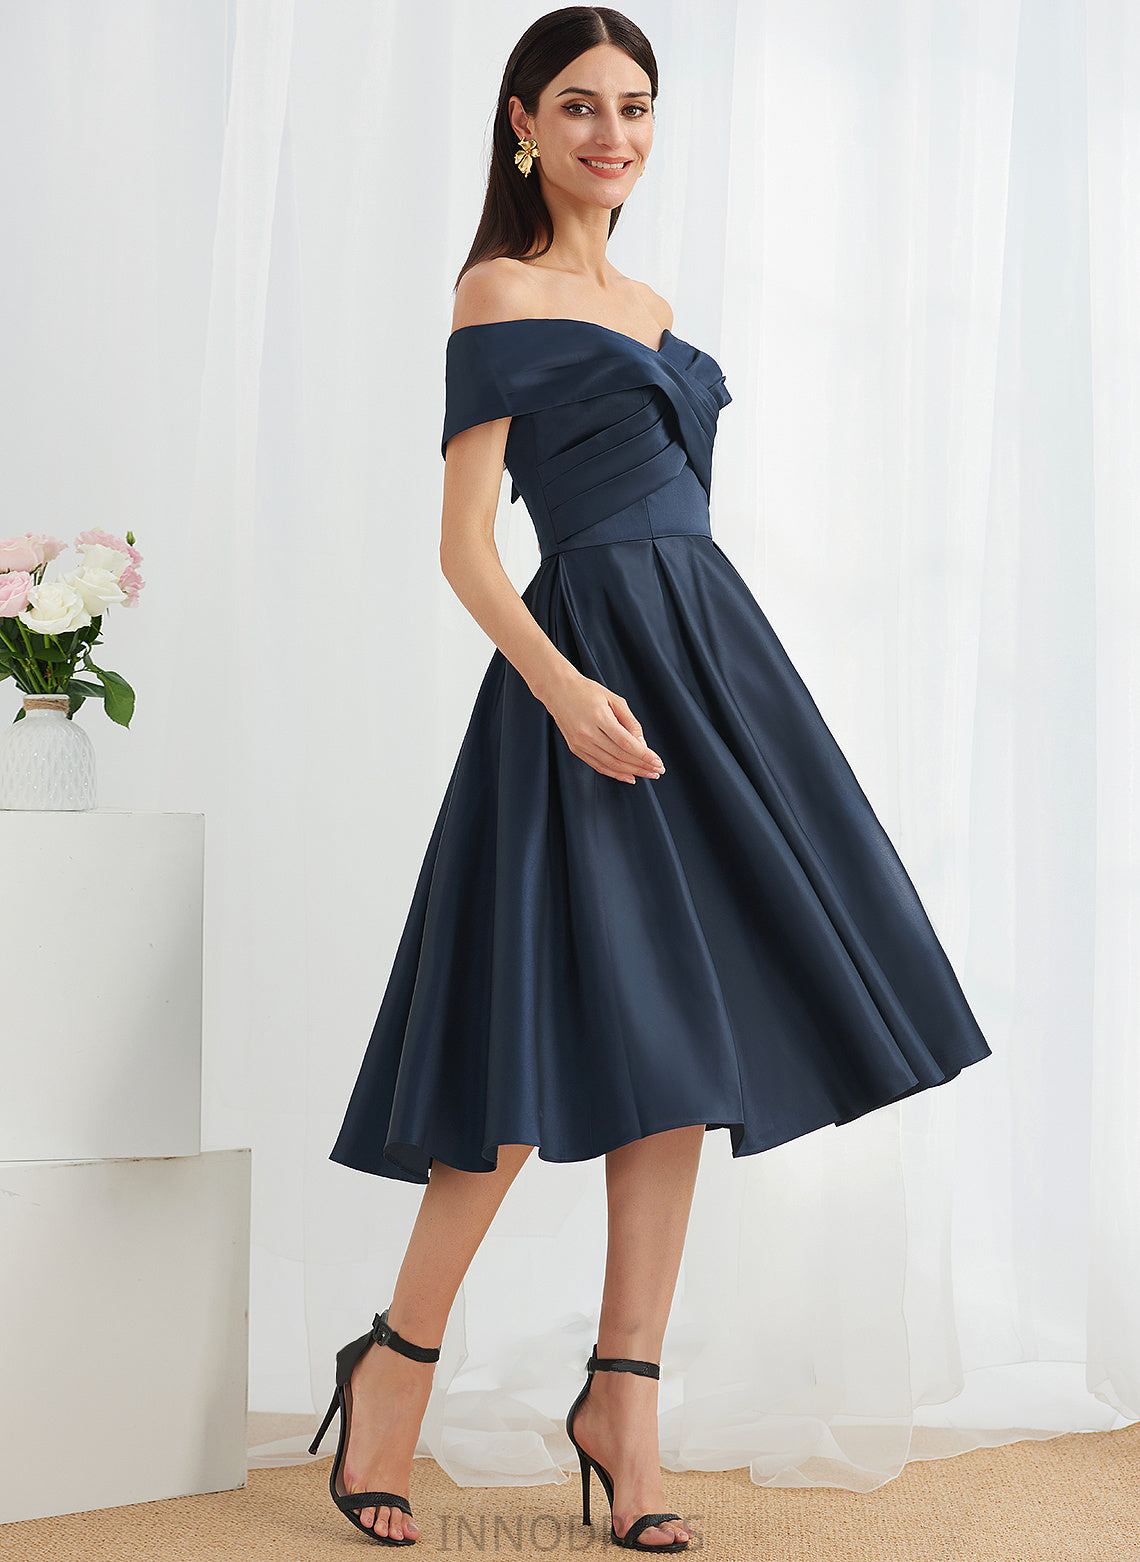 Embellishment Silhouette Fabric A-Line Off-the-Shoulder Pockets Knee-Length Length Neckline Cindy Straps Natural Waist